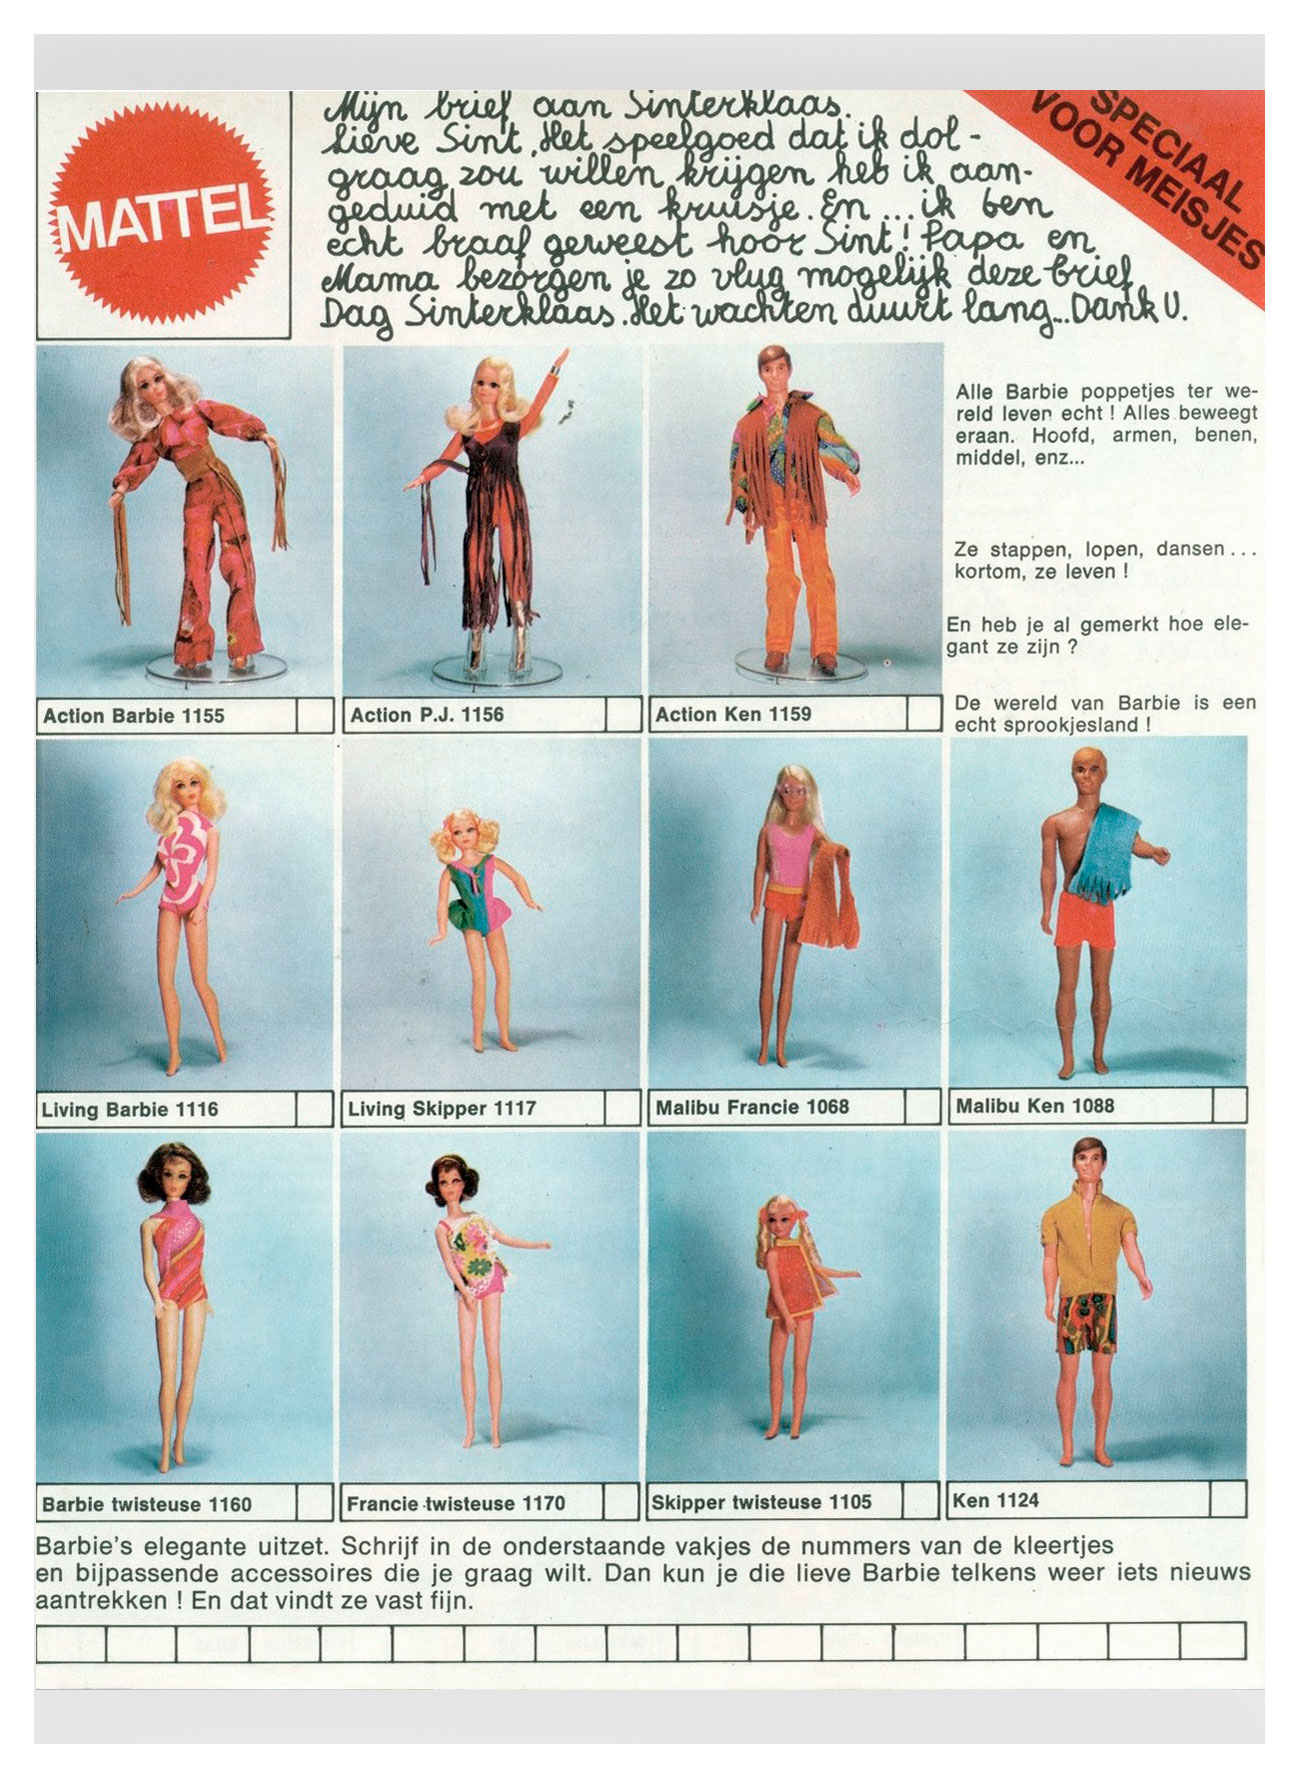 1971 Dutch Barbie & Ken advertisement